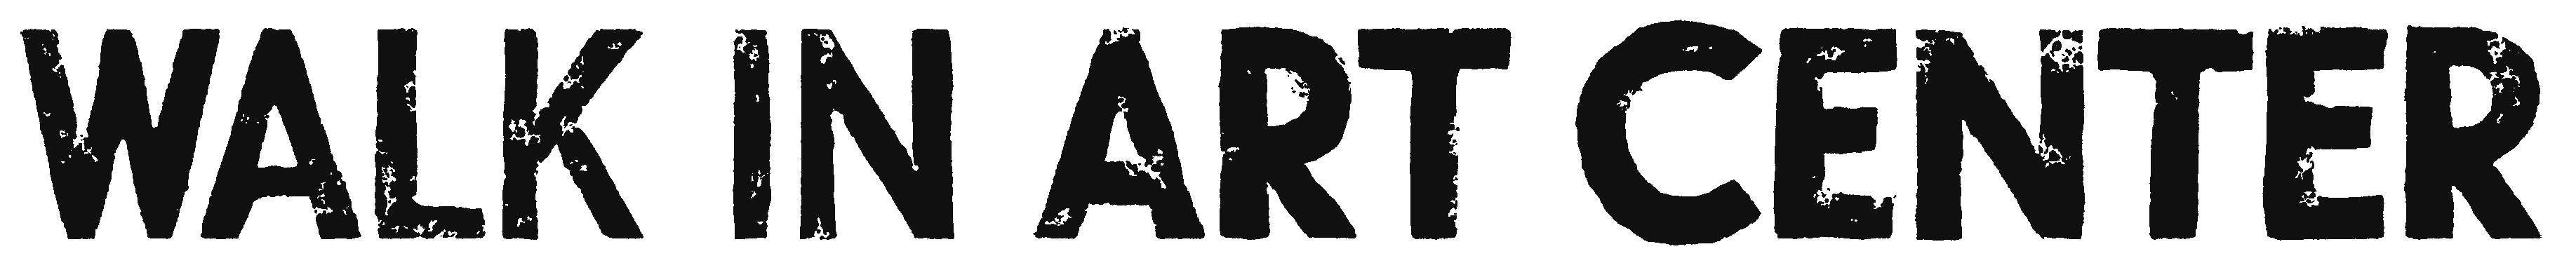 My Walk In Art Center text logo